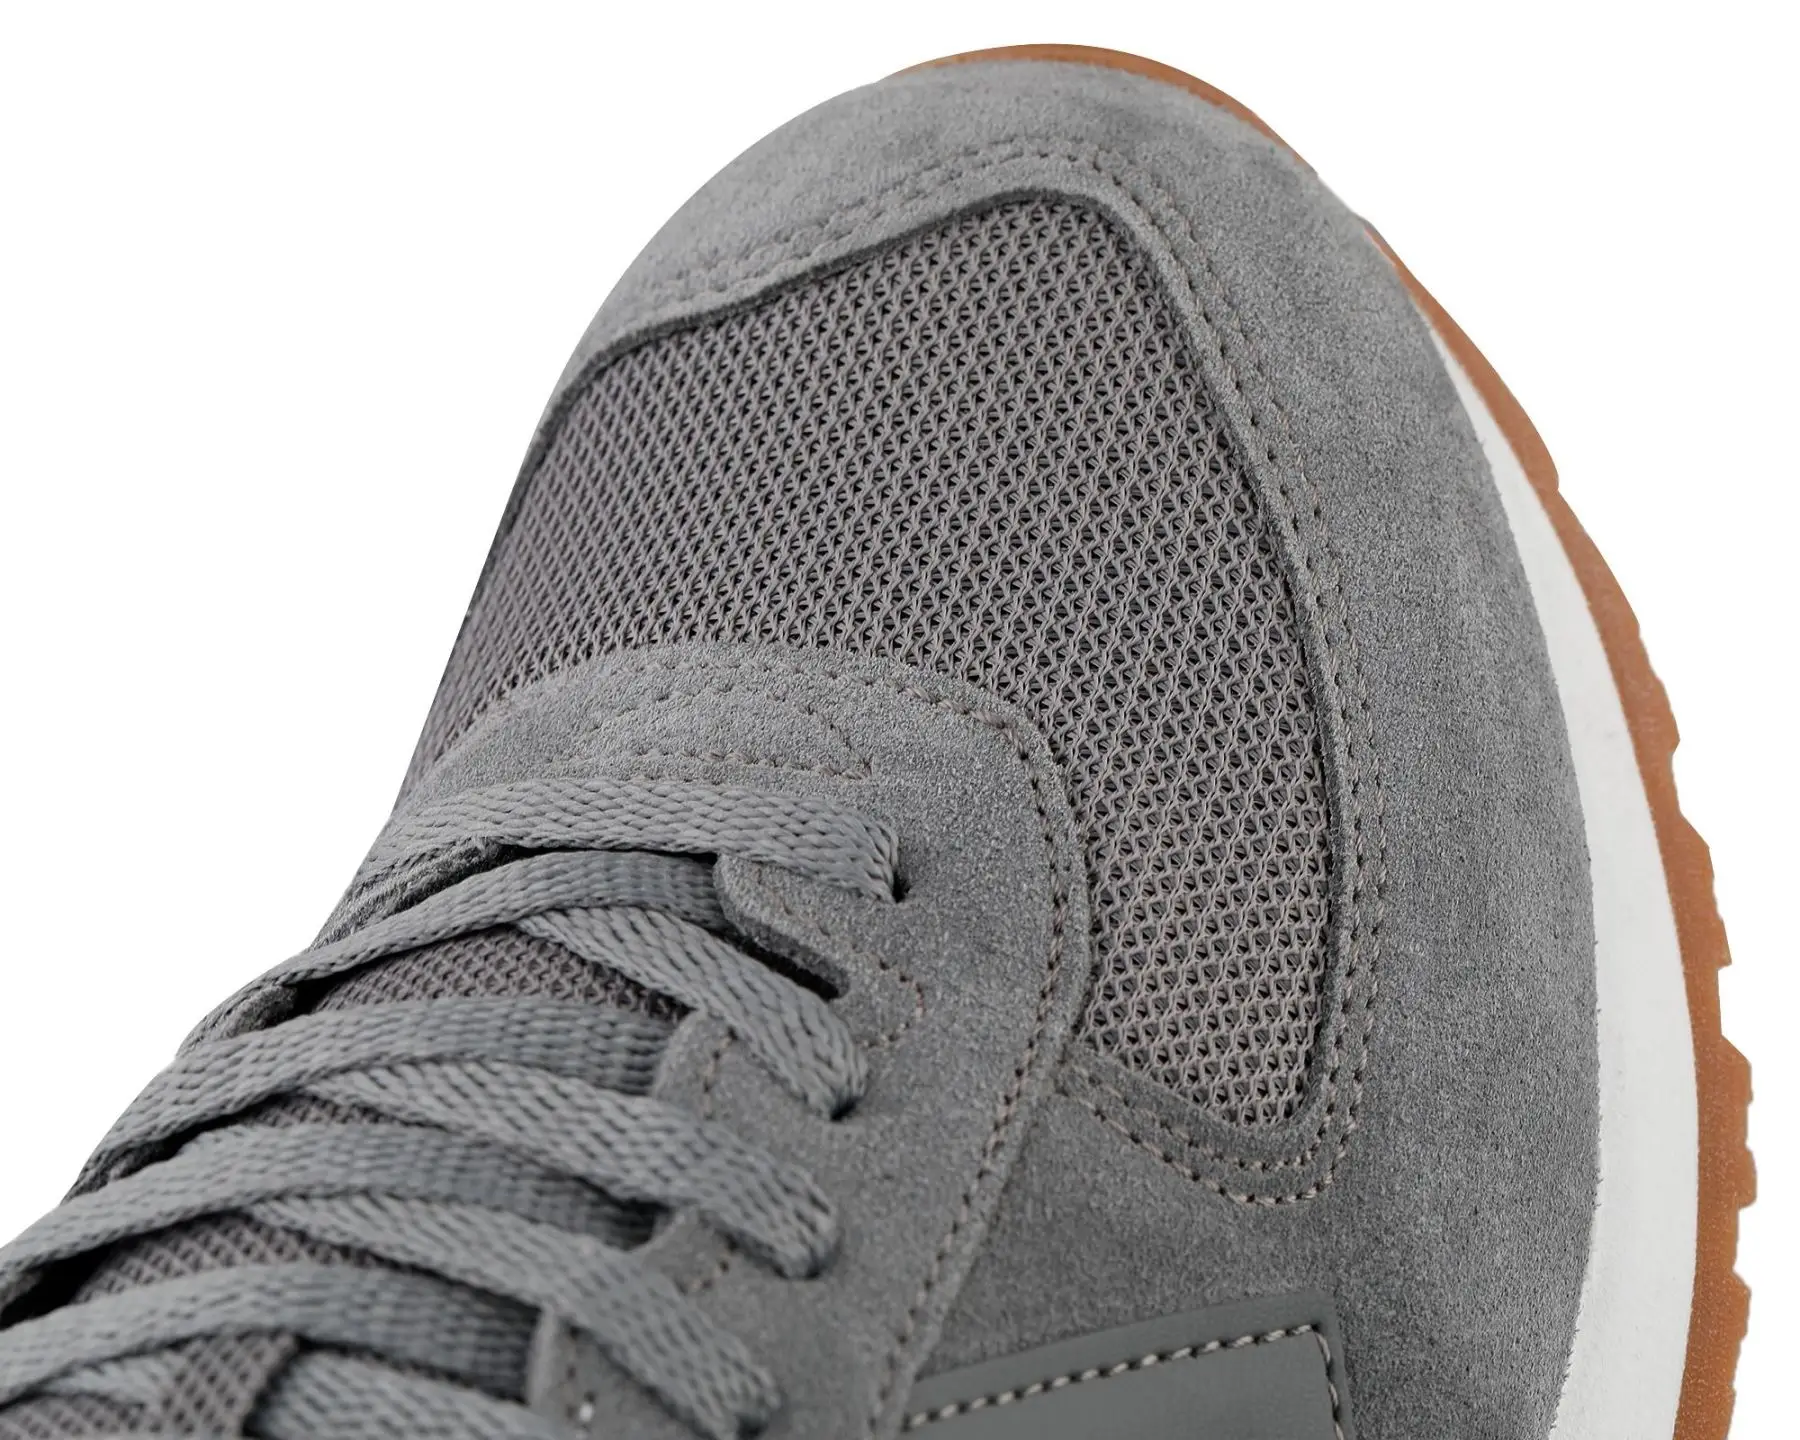 Hummel-zapatillas de deporte originales para hombre, zapatos informales de  Color gris para caminar a diario, zapatillas Hmleightyone - AliExpress